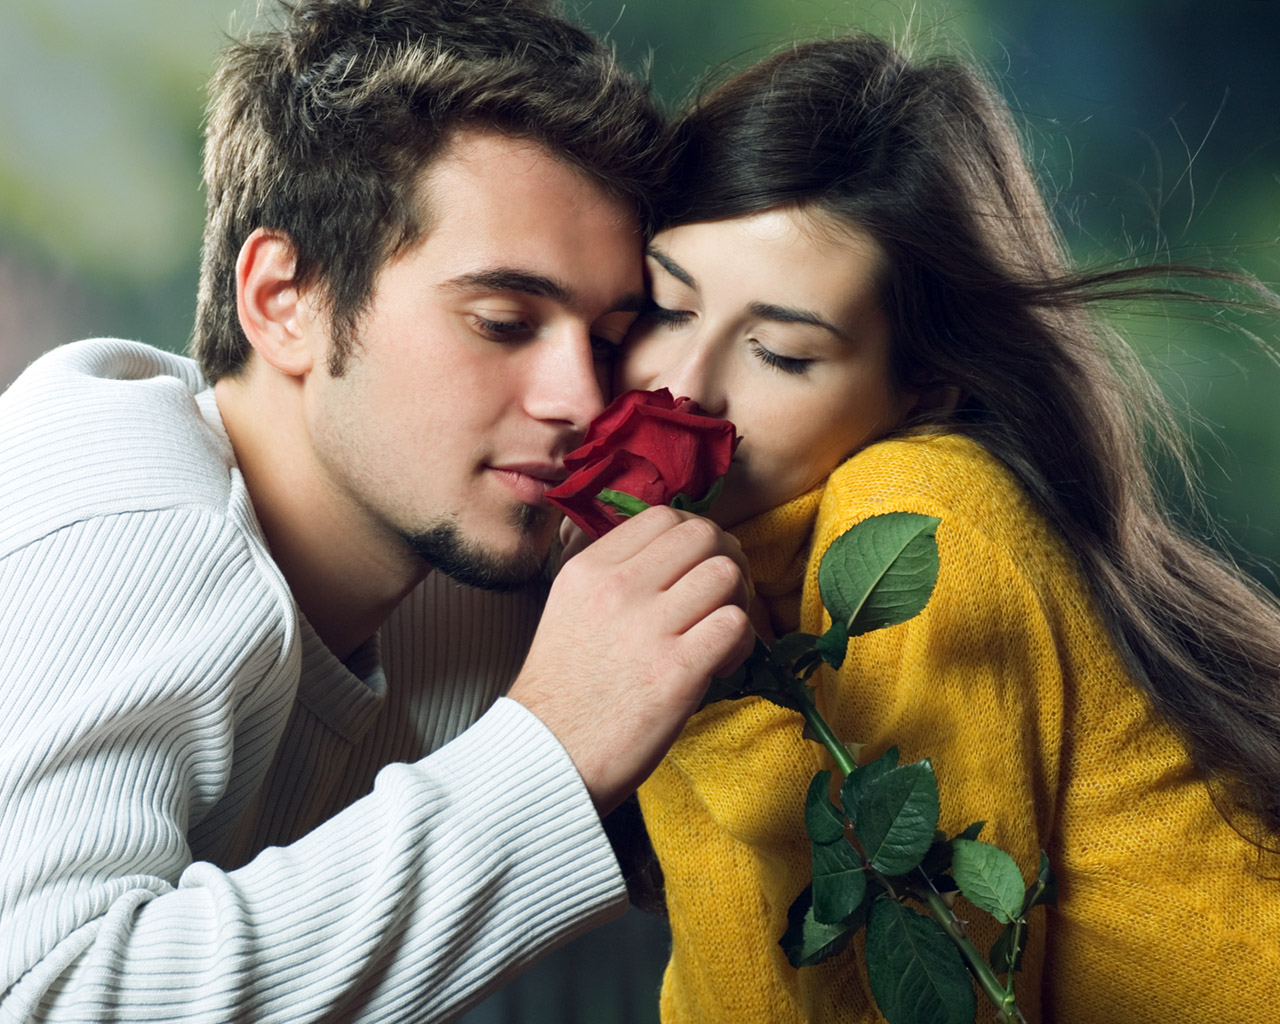 Free Download Romantic Beautiful Love Couple Hd Wallpaper 1280x1024